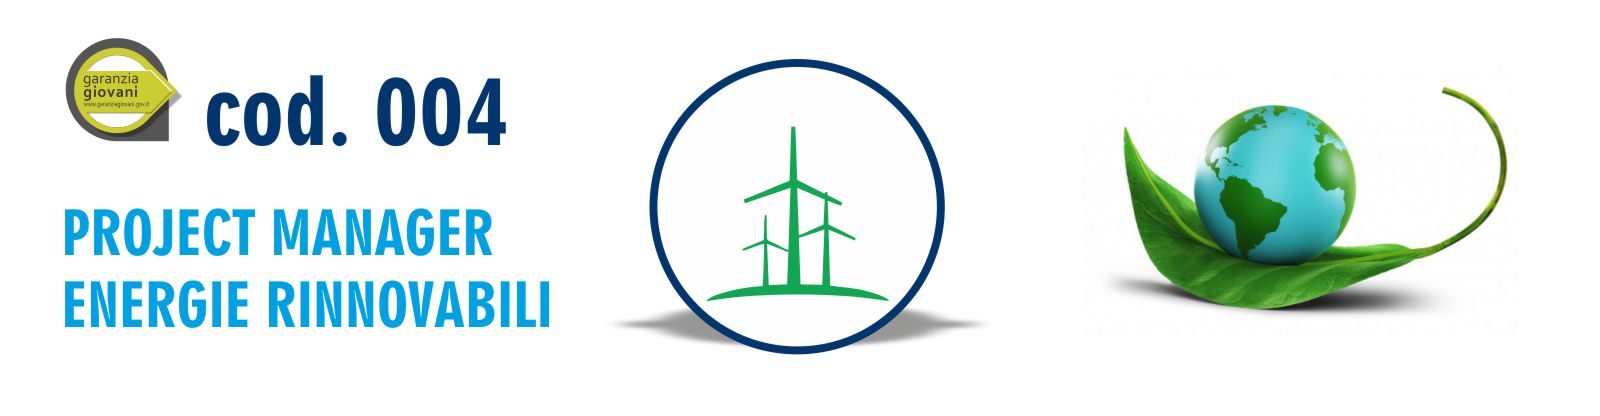 energie-rinnovabili-big